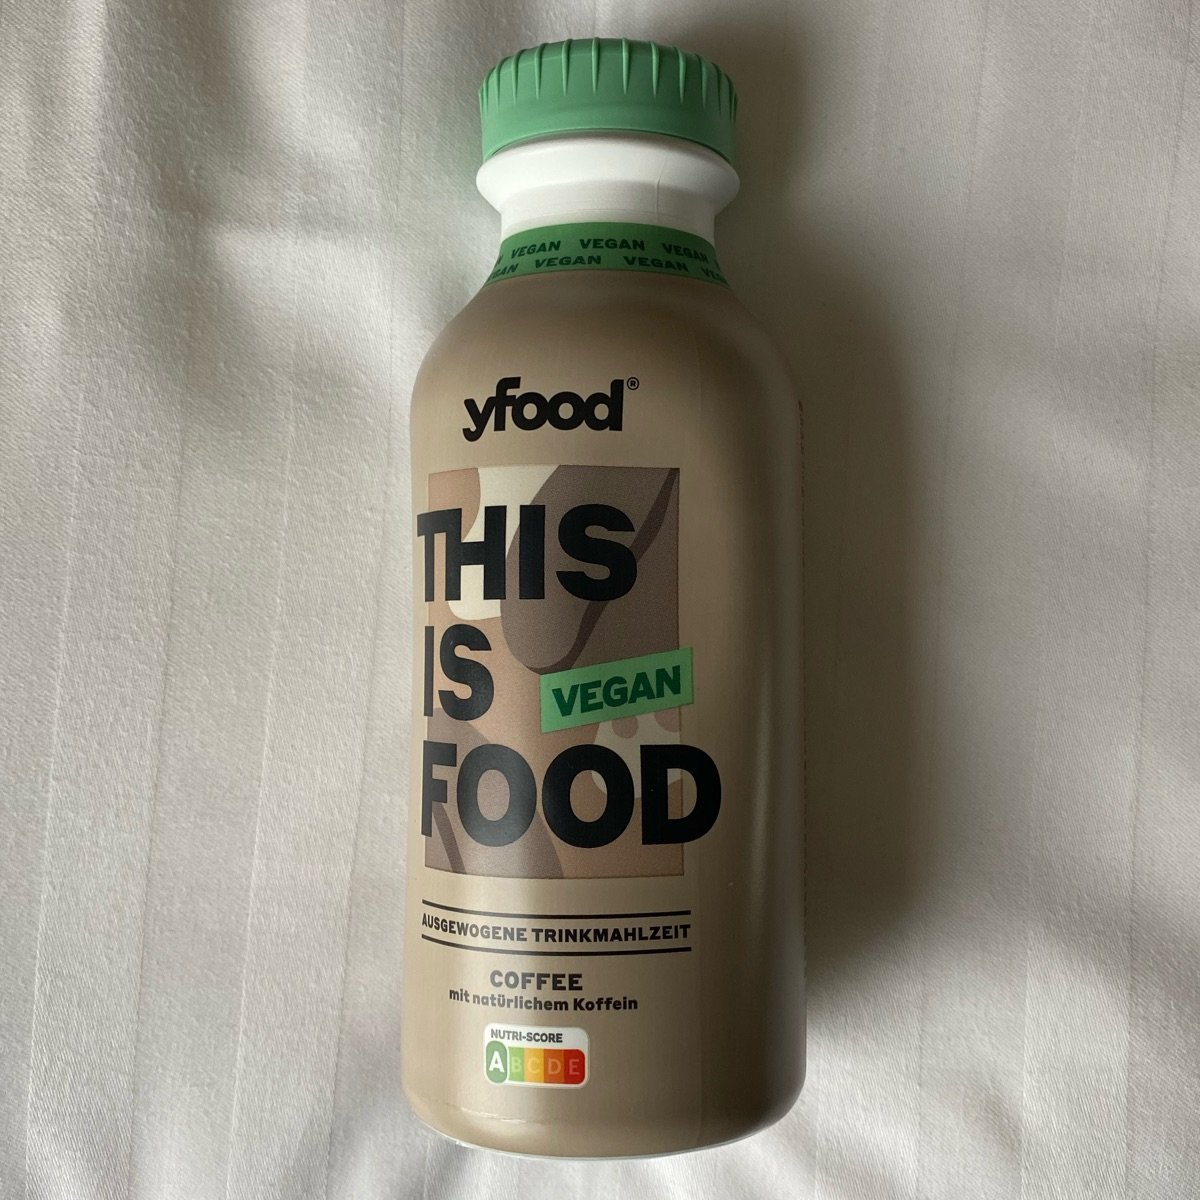 YFOOD Trinkmahlzeit Vegane Coffee - Vegan Meal Replacement Drink